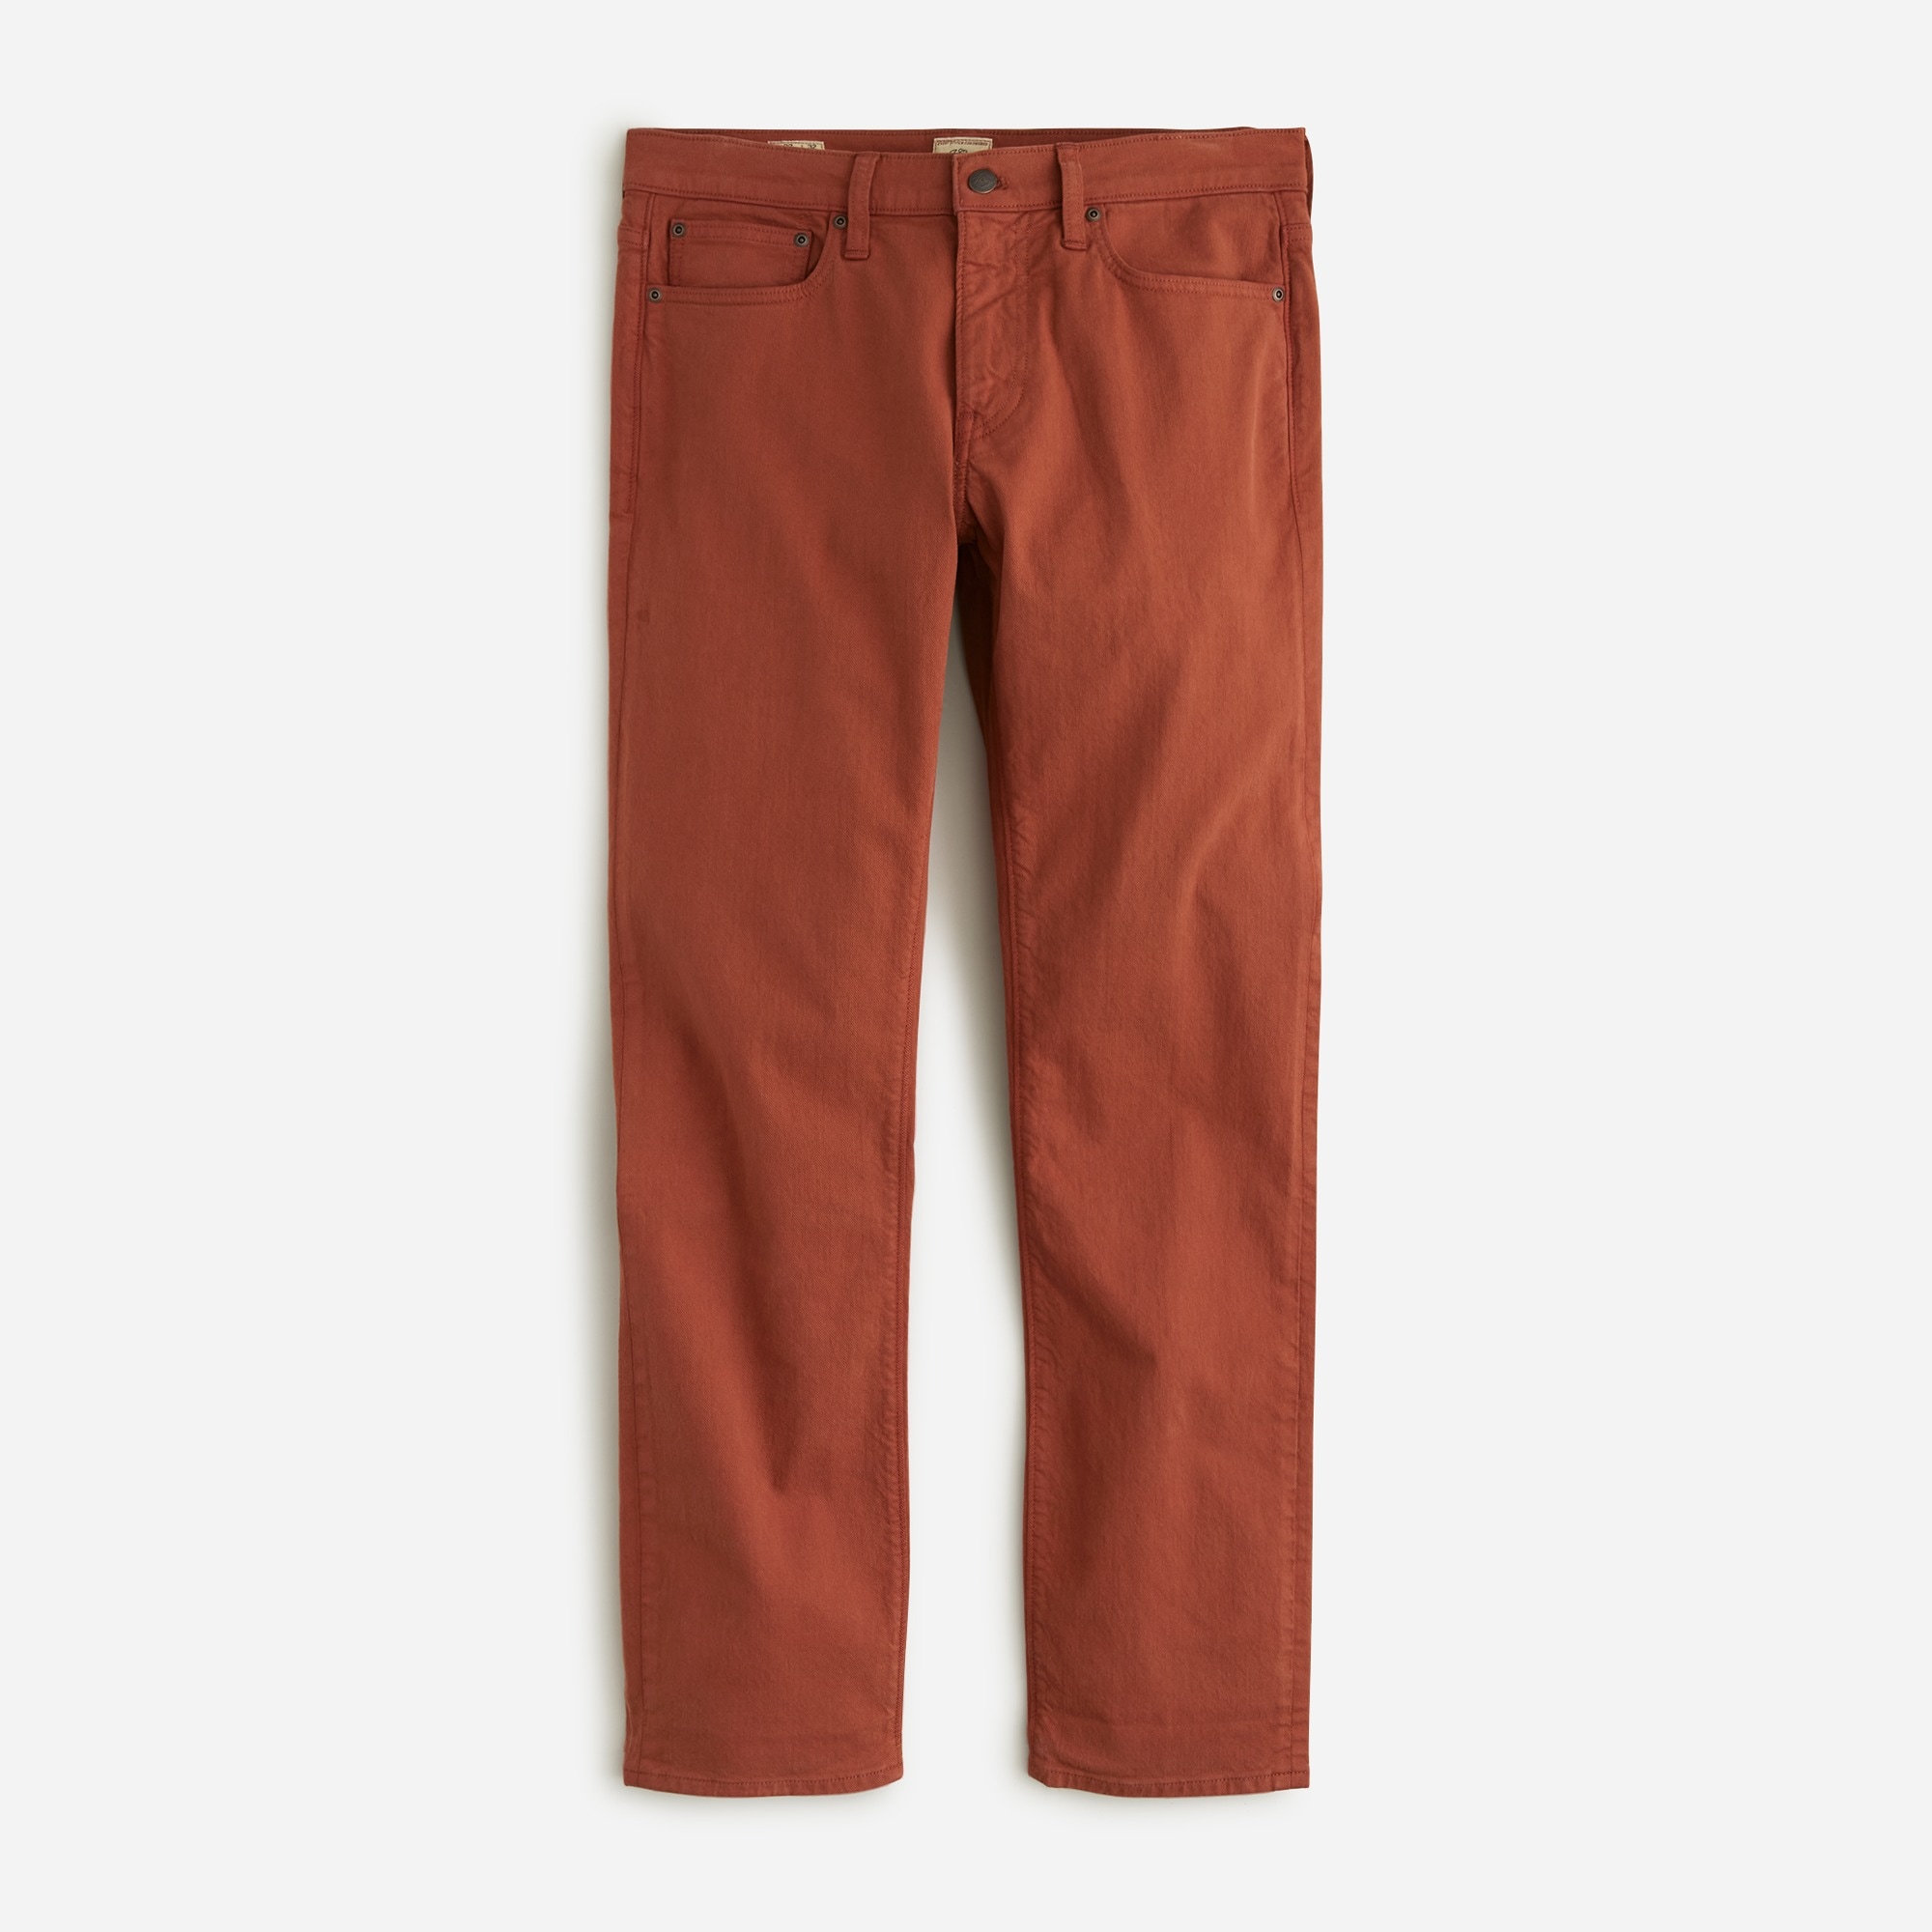  484 Slim-fit garment-dyed five-pocket pant